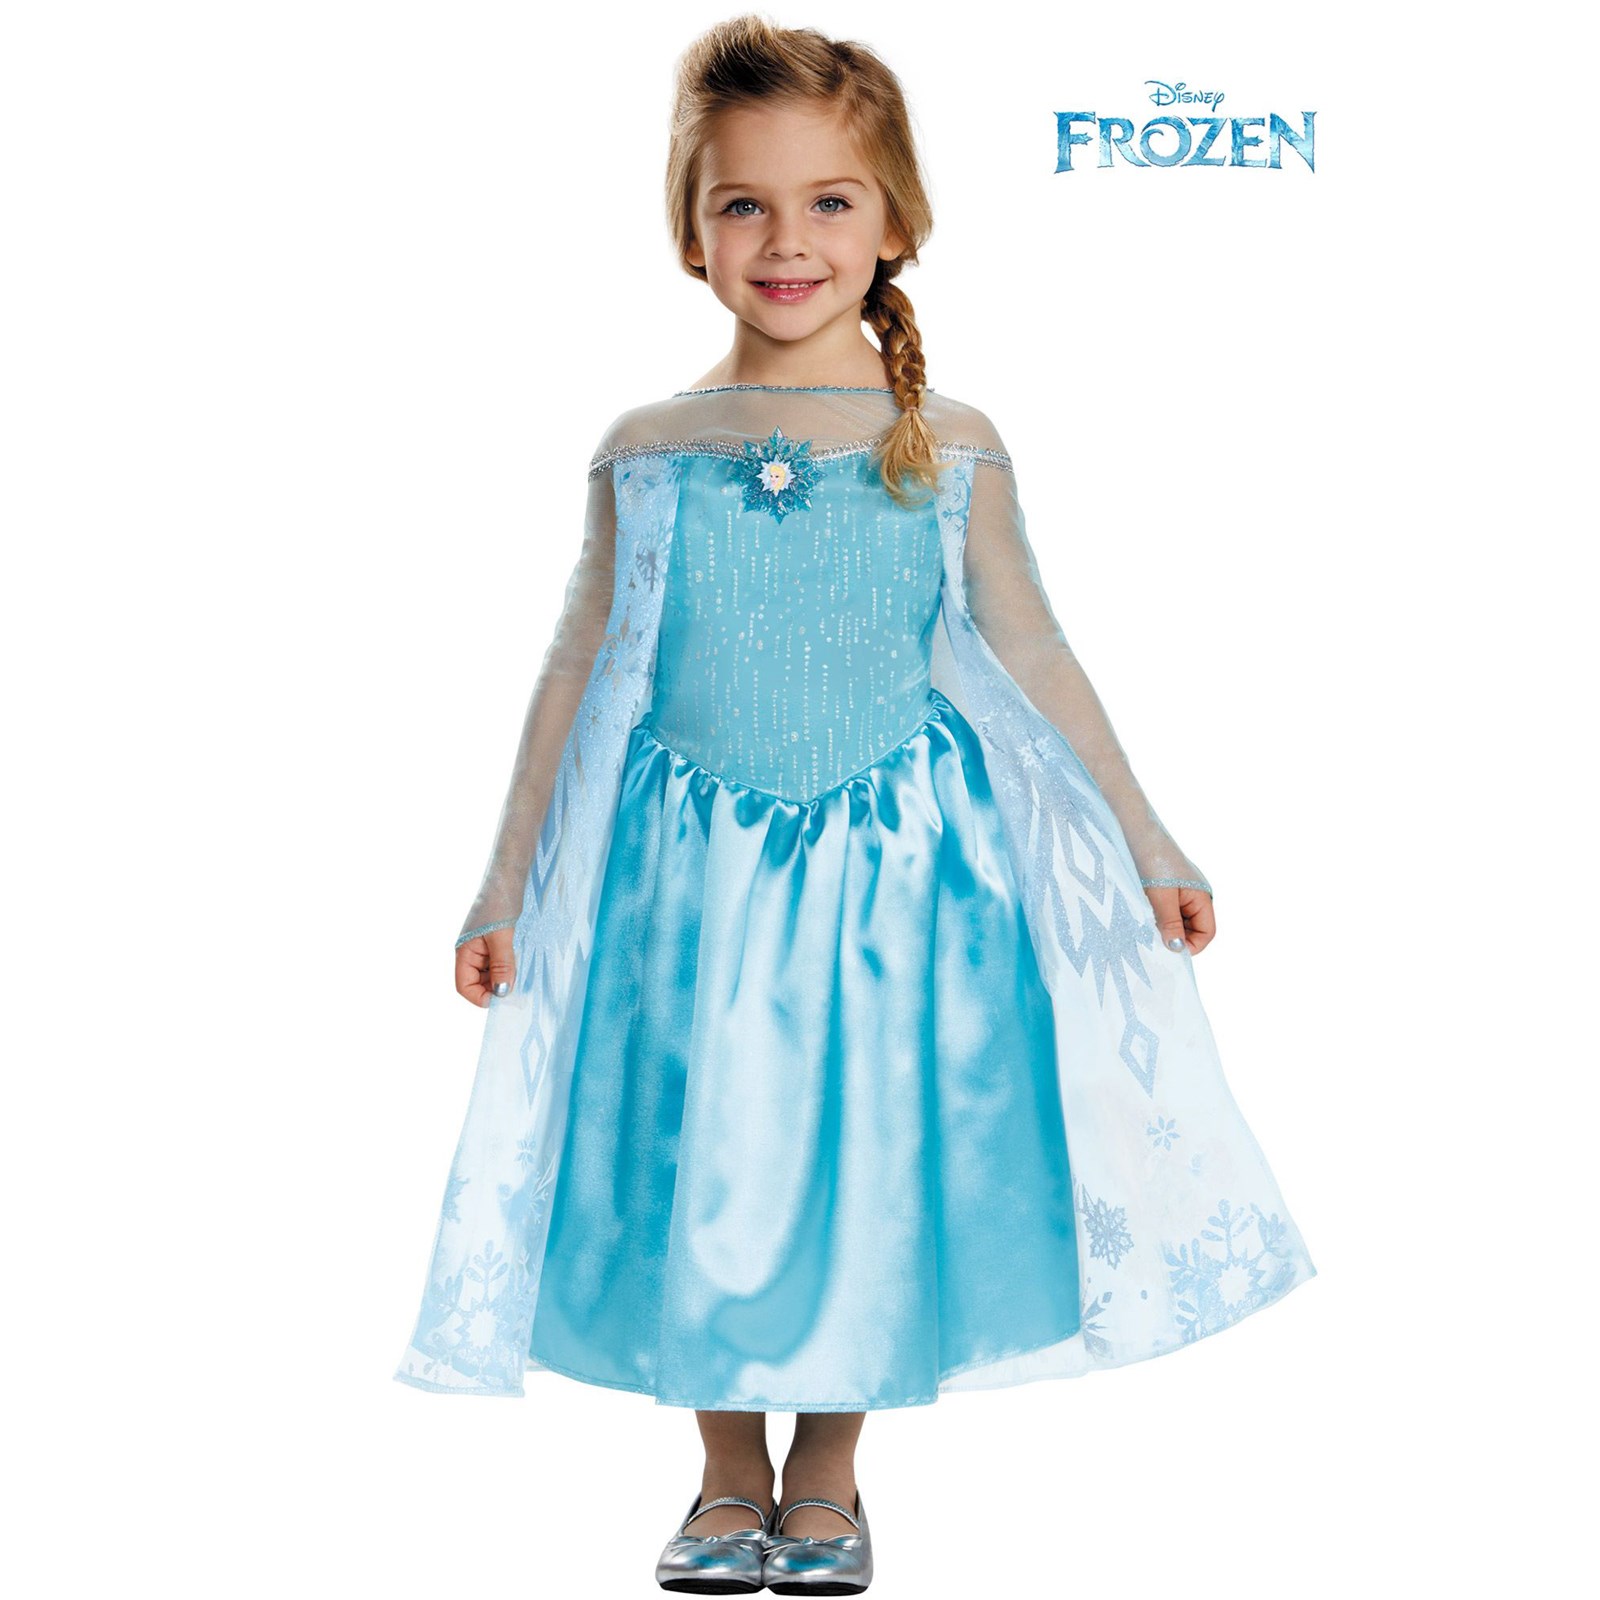 Elsa Toddler Classic Costume - image 1 of 2